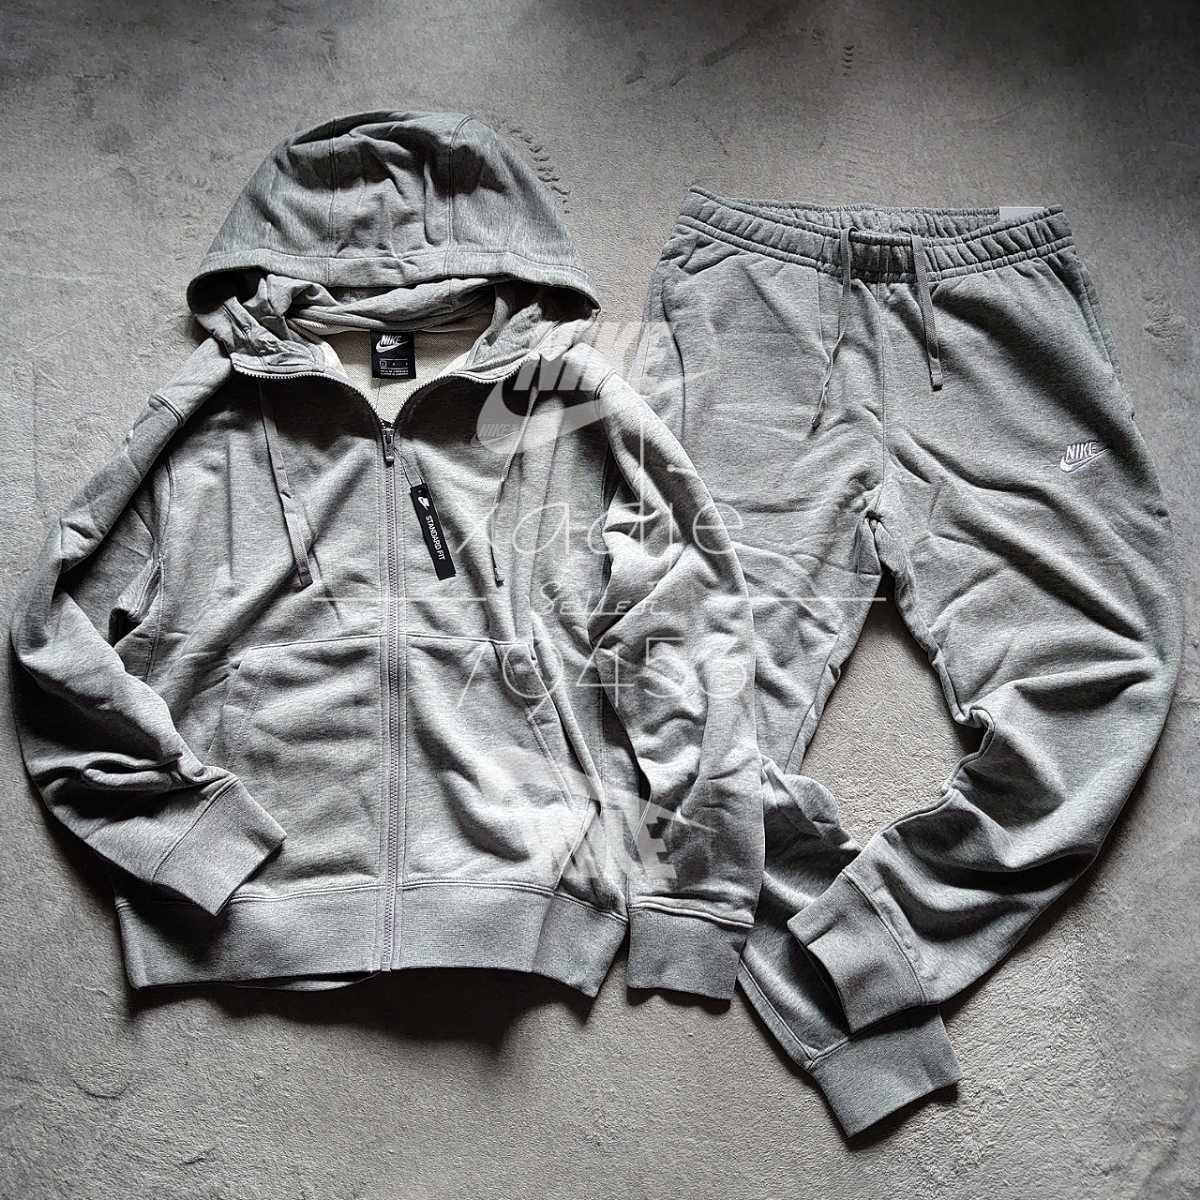  new goods regular goods NIKE Nike sweat top and bottom set Parker pants Logo embroidery setup ash gray white ...L